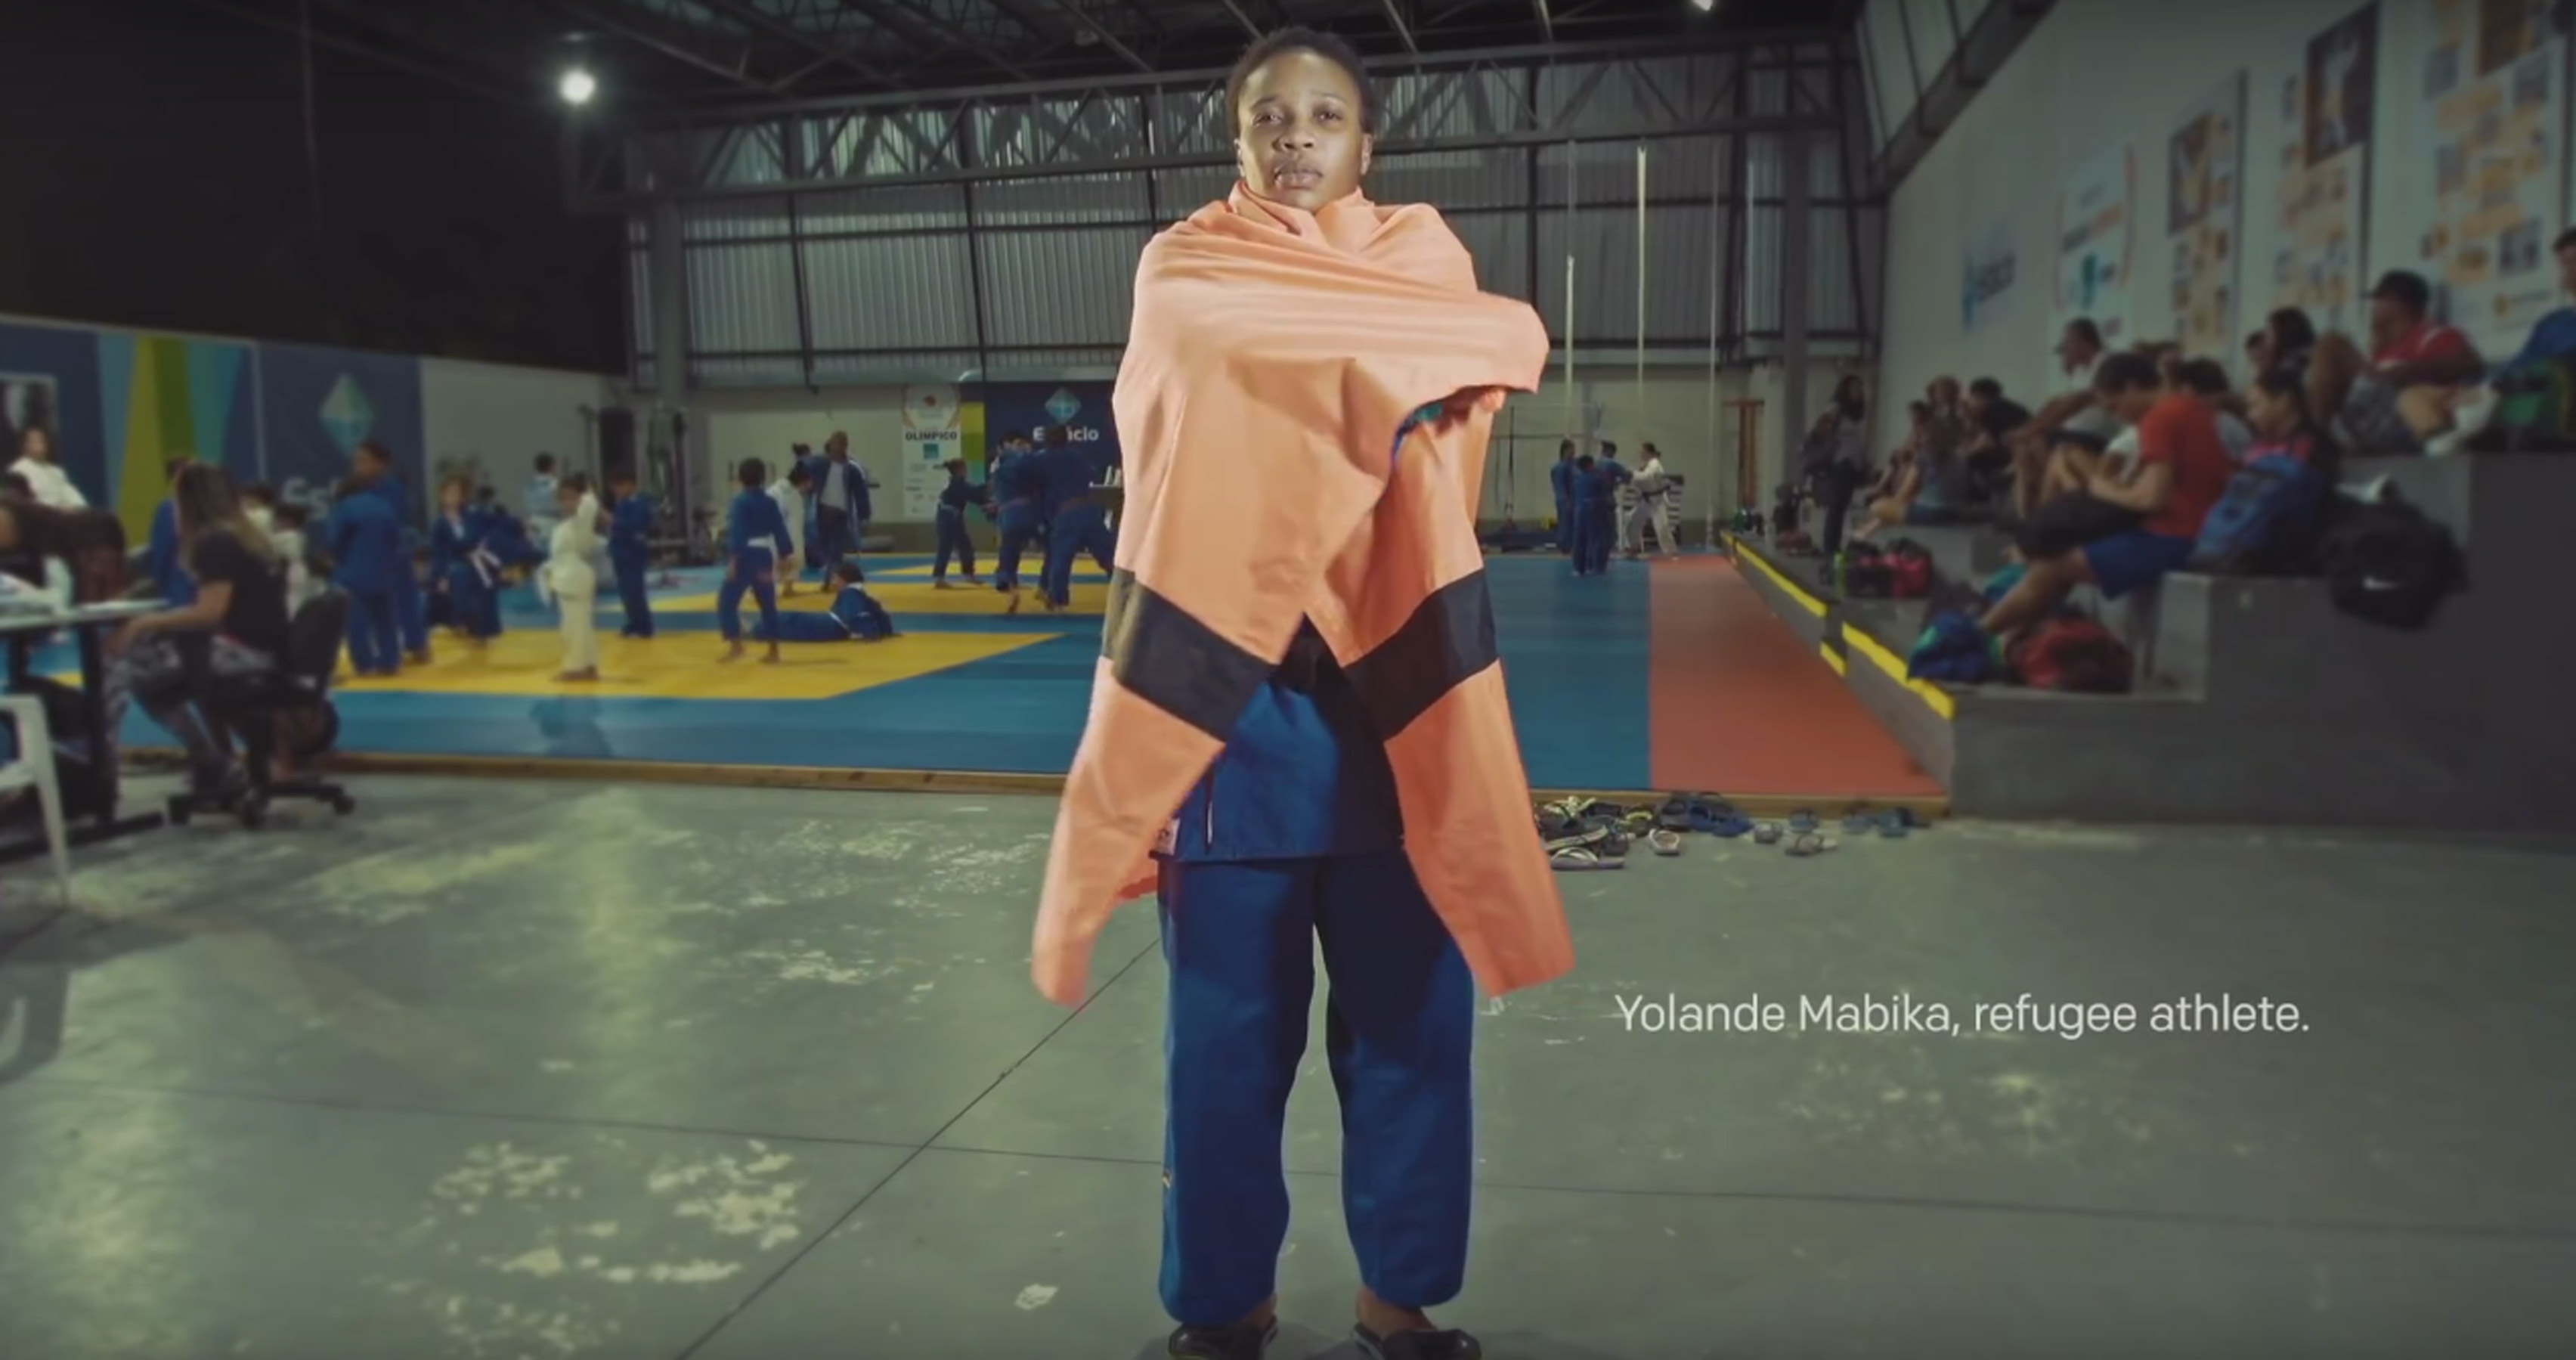 Refugees create flag for their Rio 2016 Olympic team